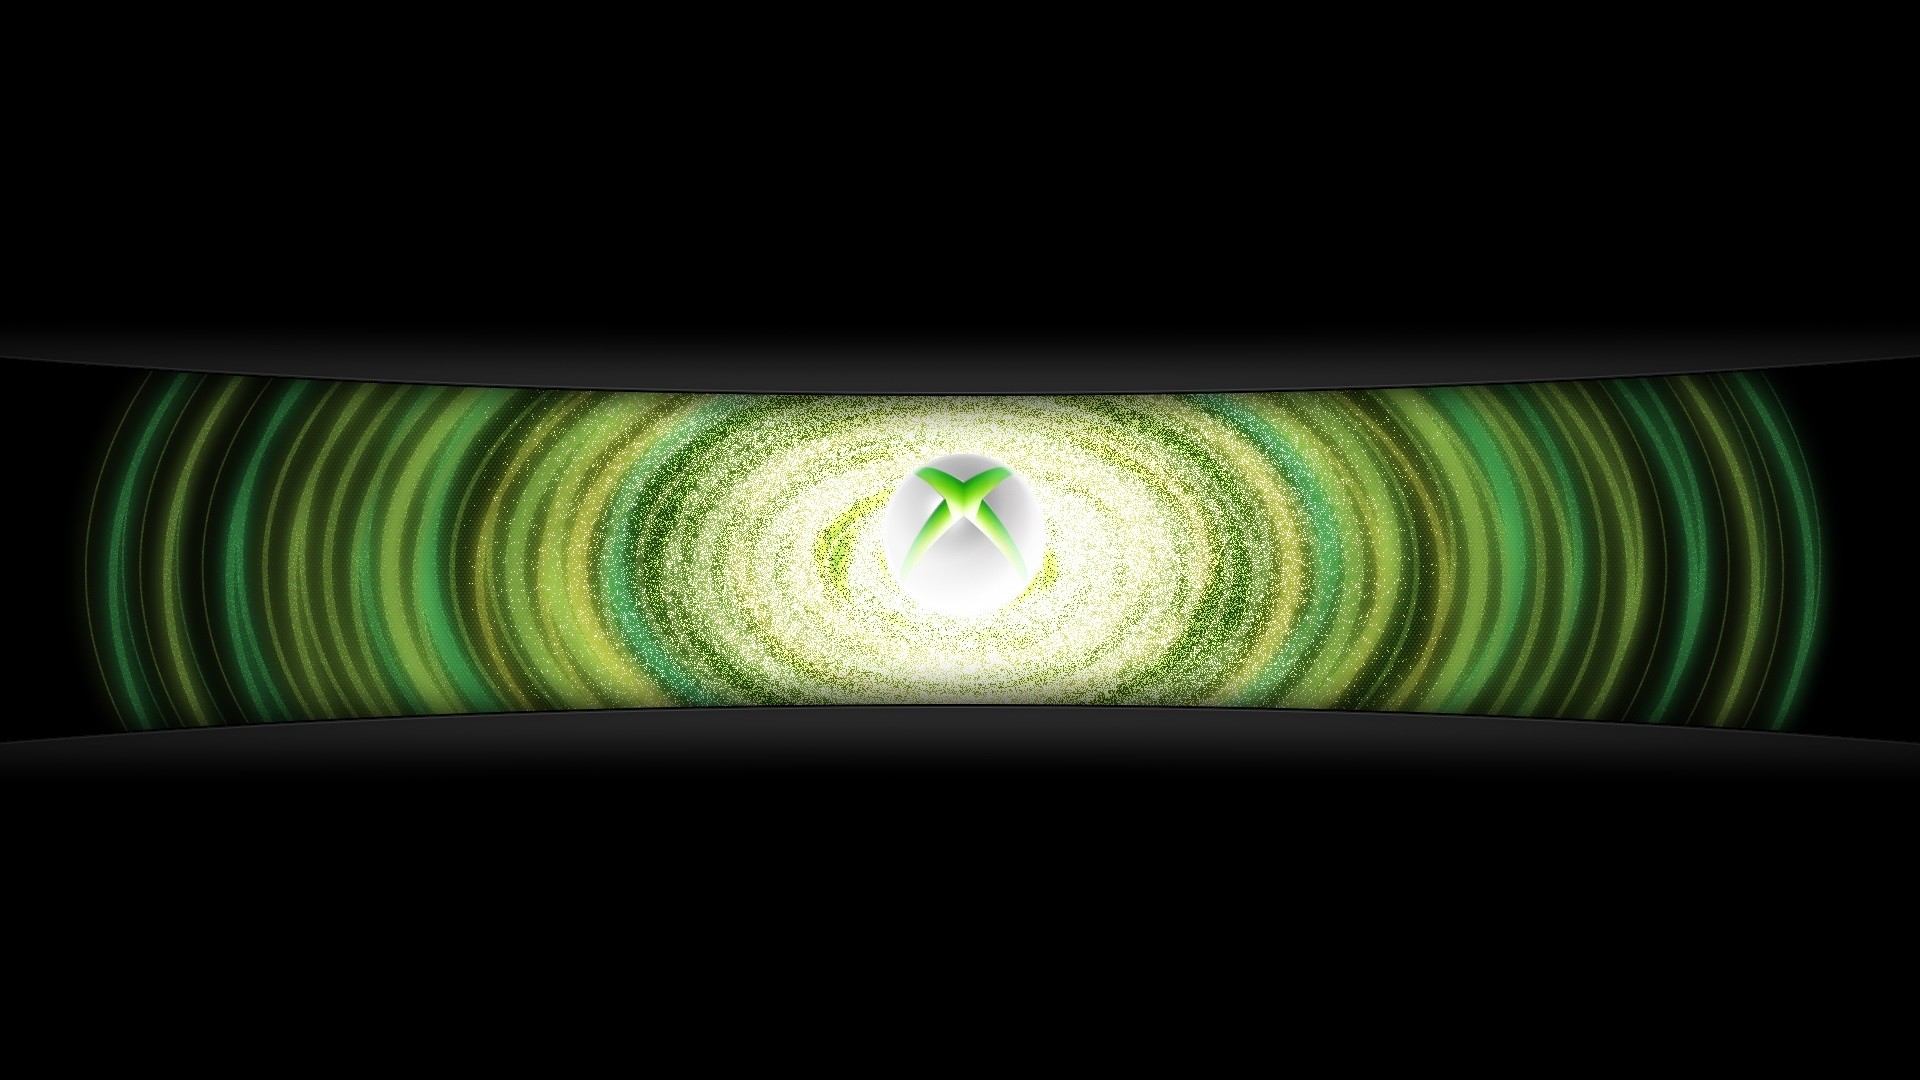 1920x1080 Xbox One Wallpaper | Free Xbox One | Microsoft | Gamers | free online games  | New Xbox one | bestscreenwallpaper.com | #4